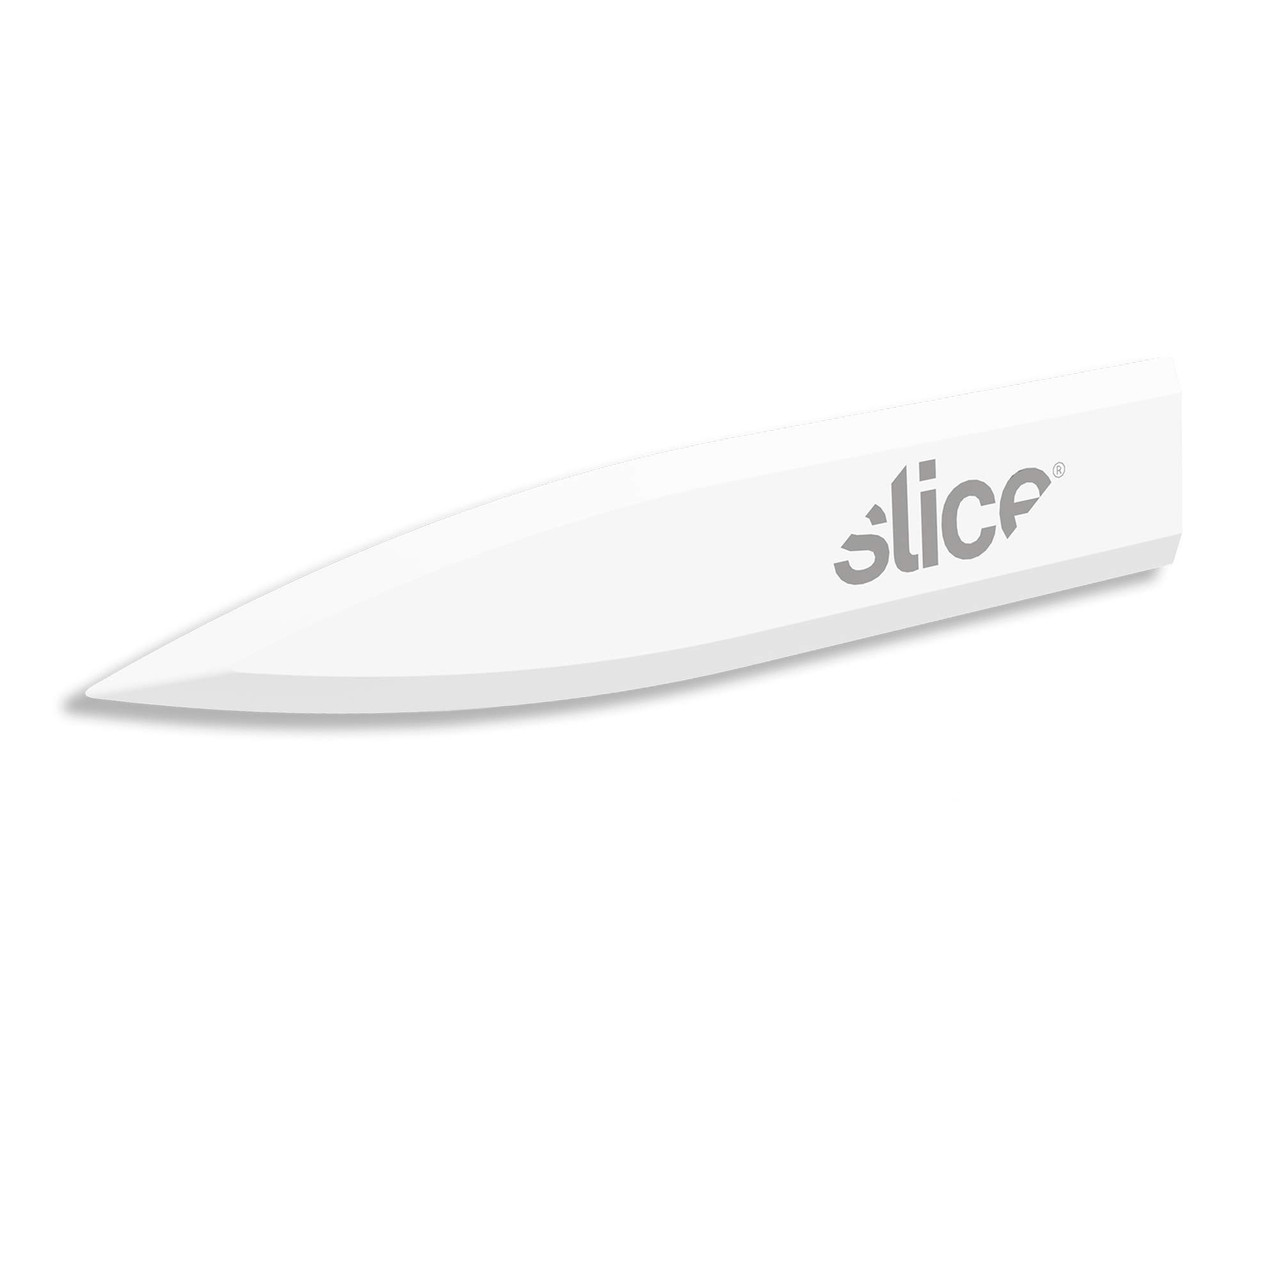 Slice Squeeze Knife Box Cutter, Ceramic Blade, Finger Friendly